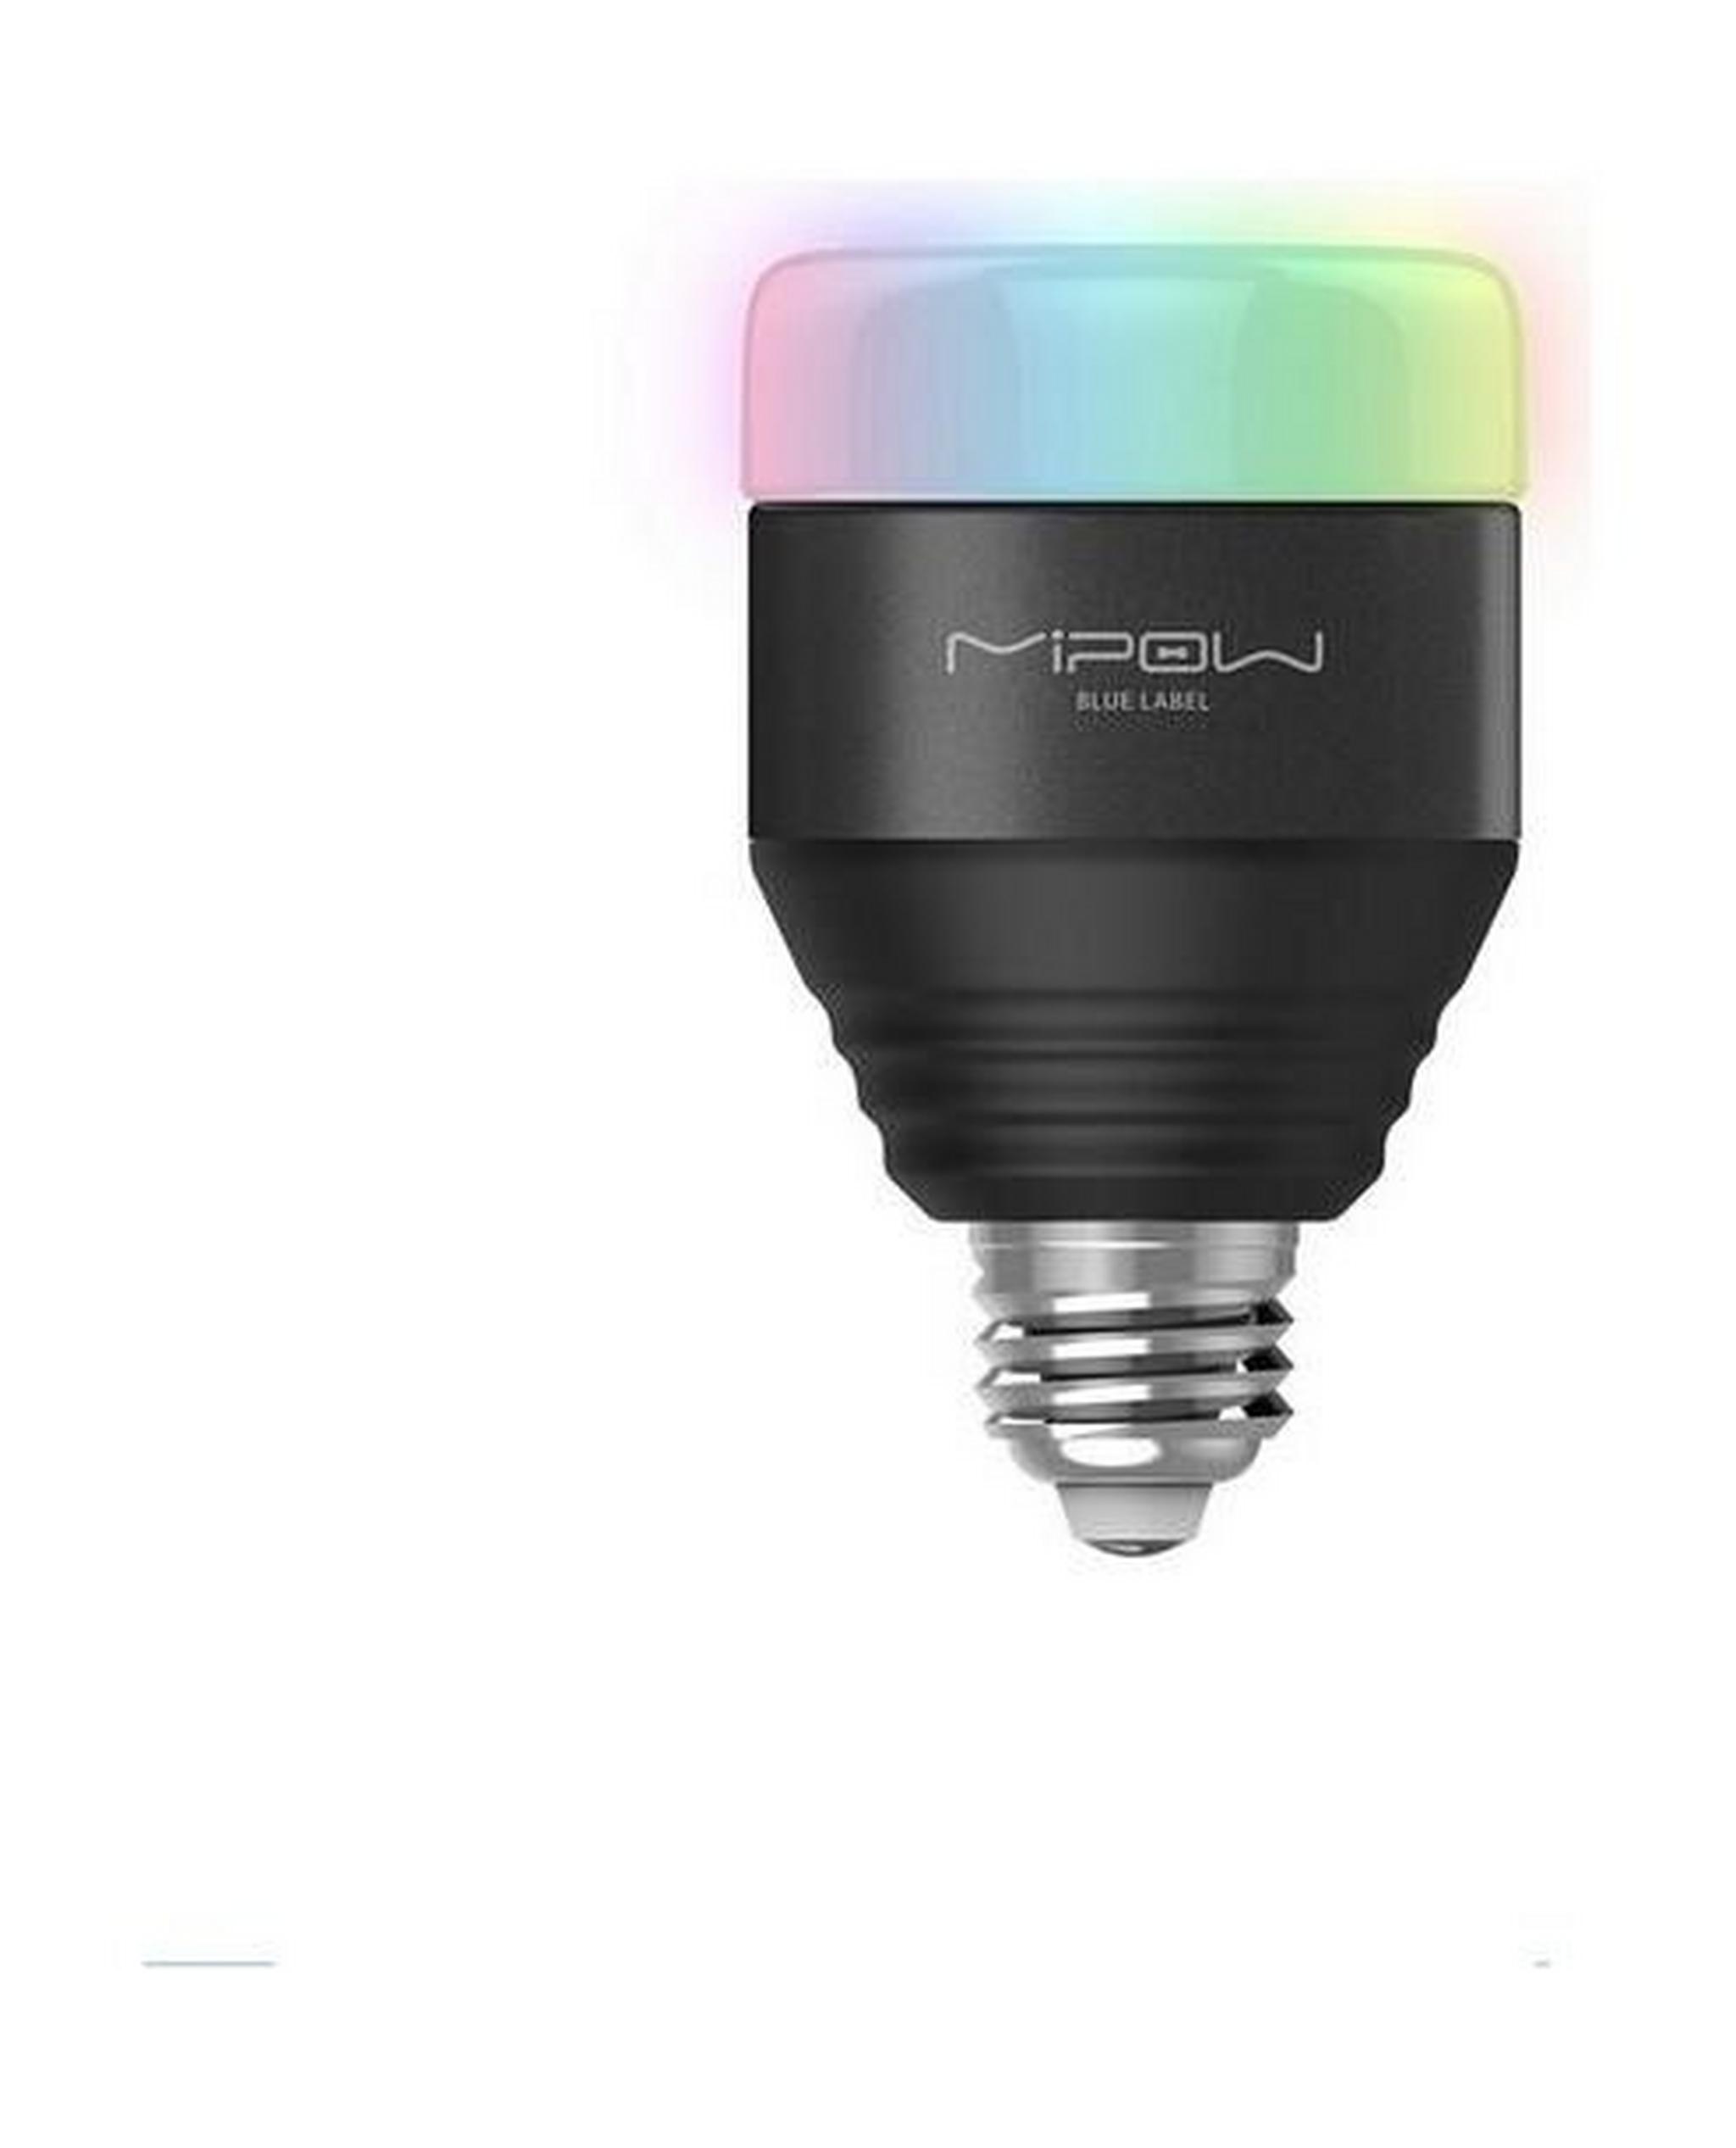 Mipow BTL201 Multi-Colored Bluetooth Smart LED Light Bulb - Black